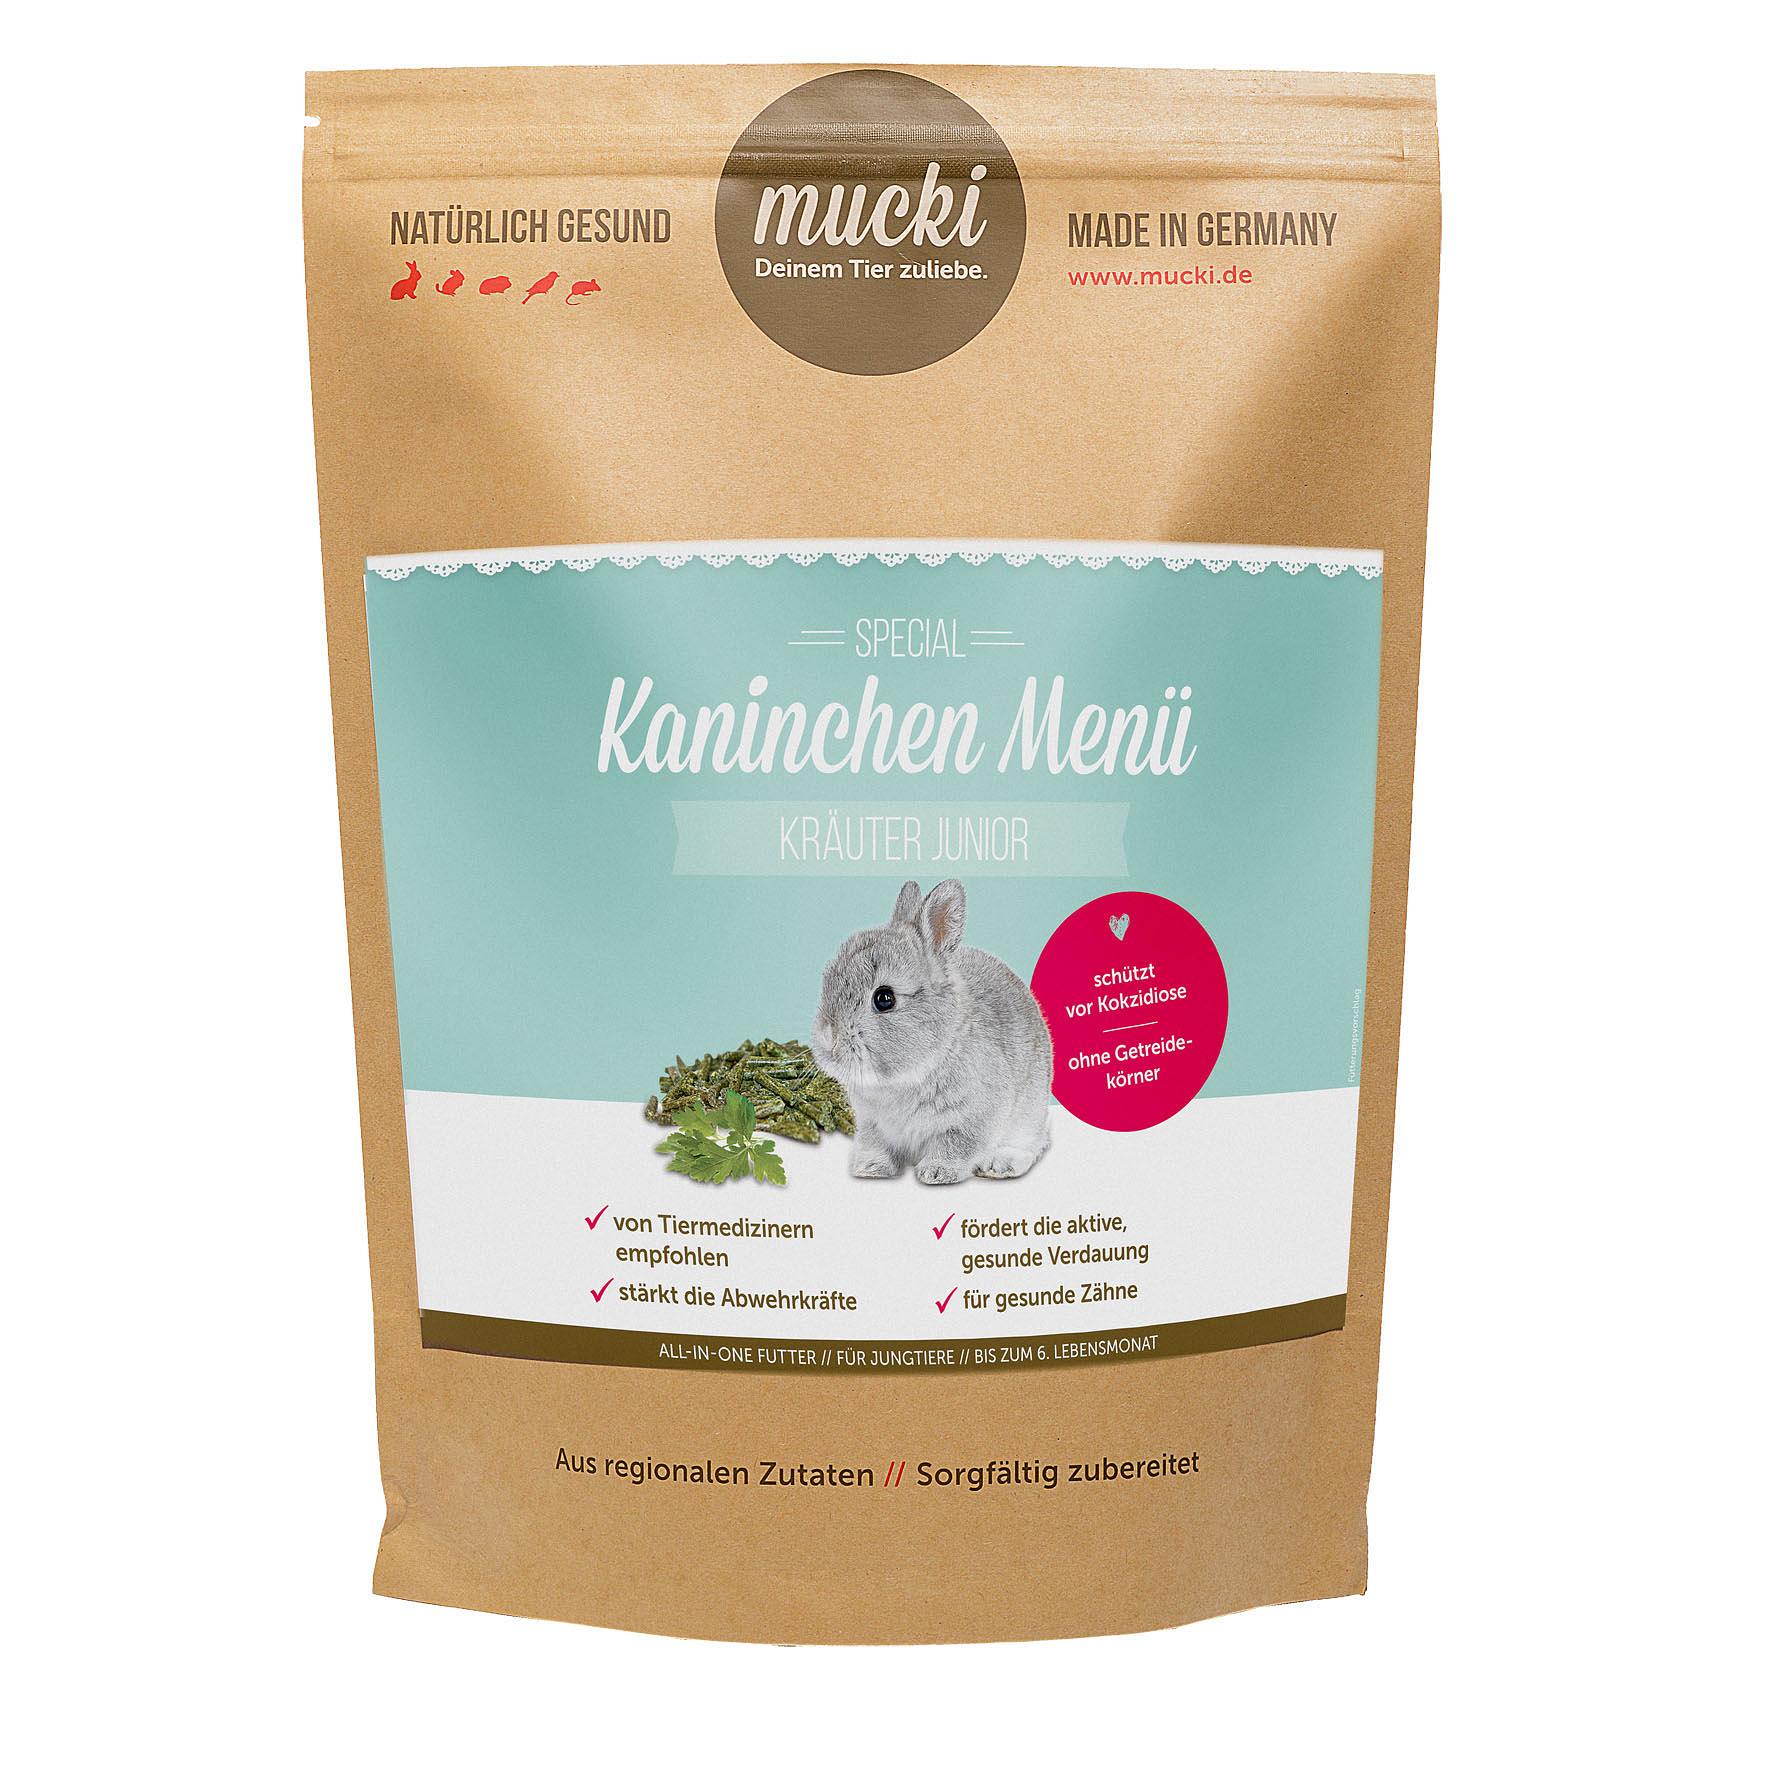 Mucki Kaninchen Menü Kräuter - Junior